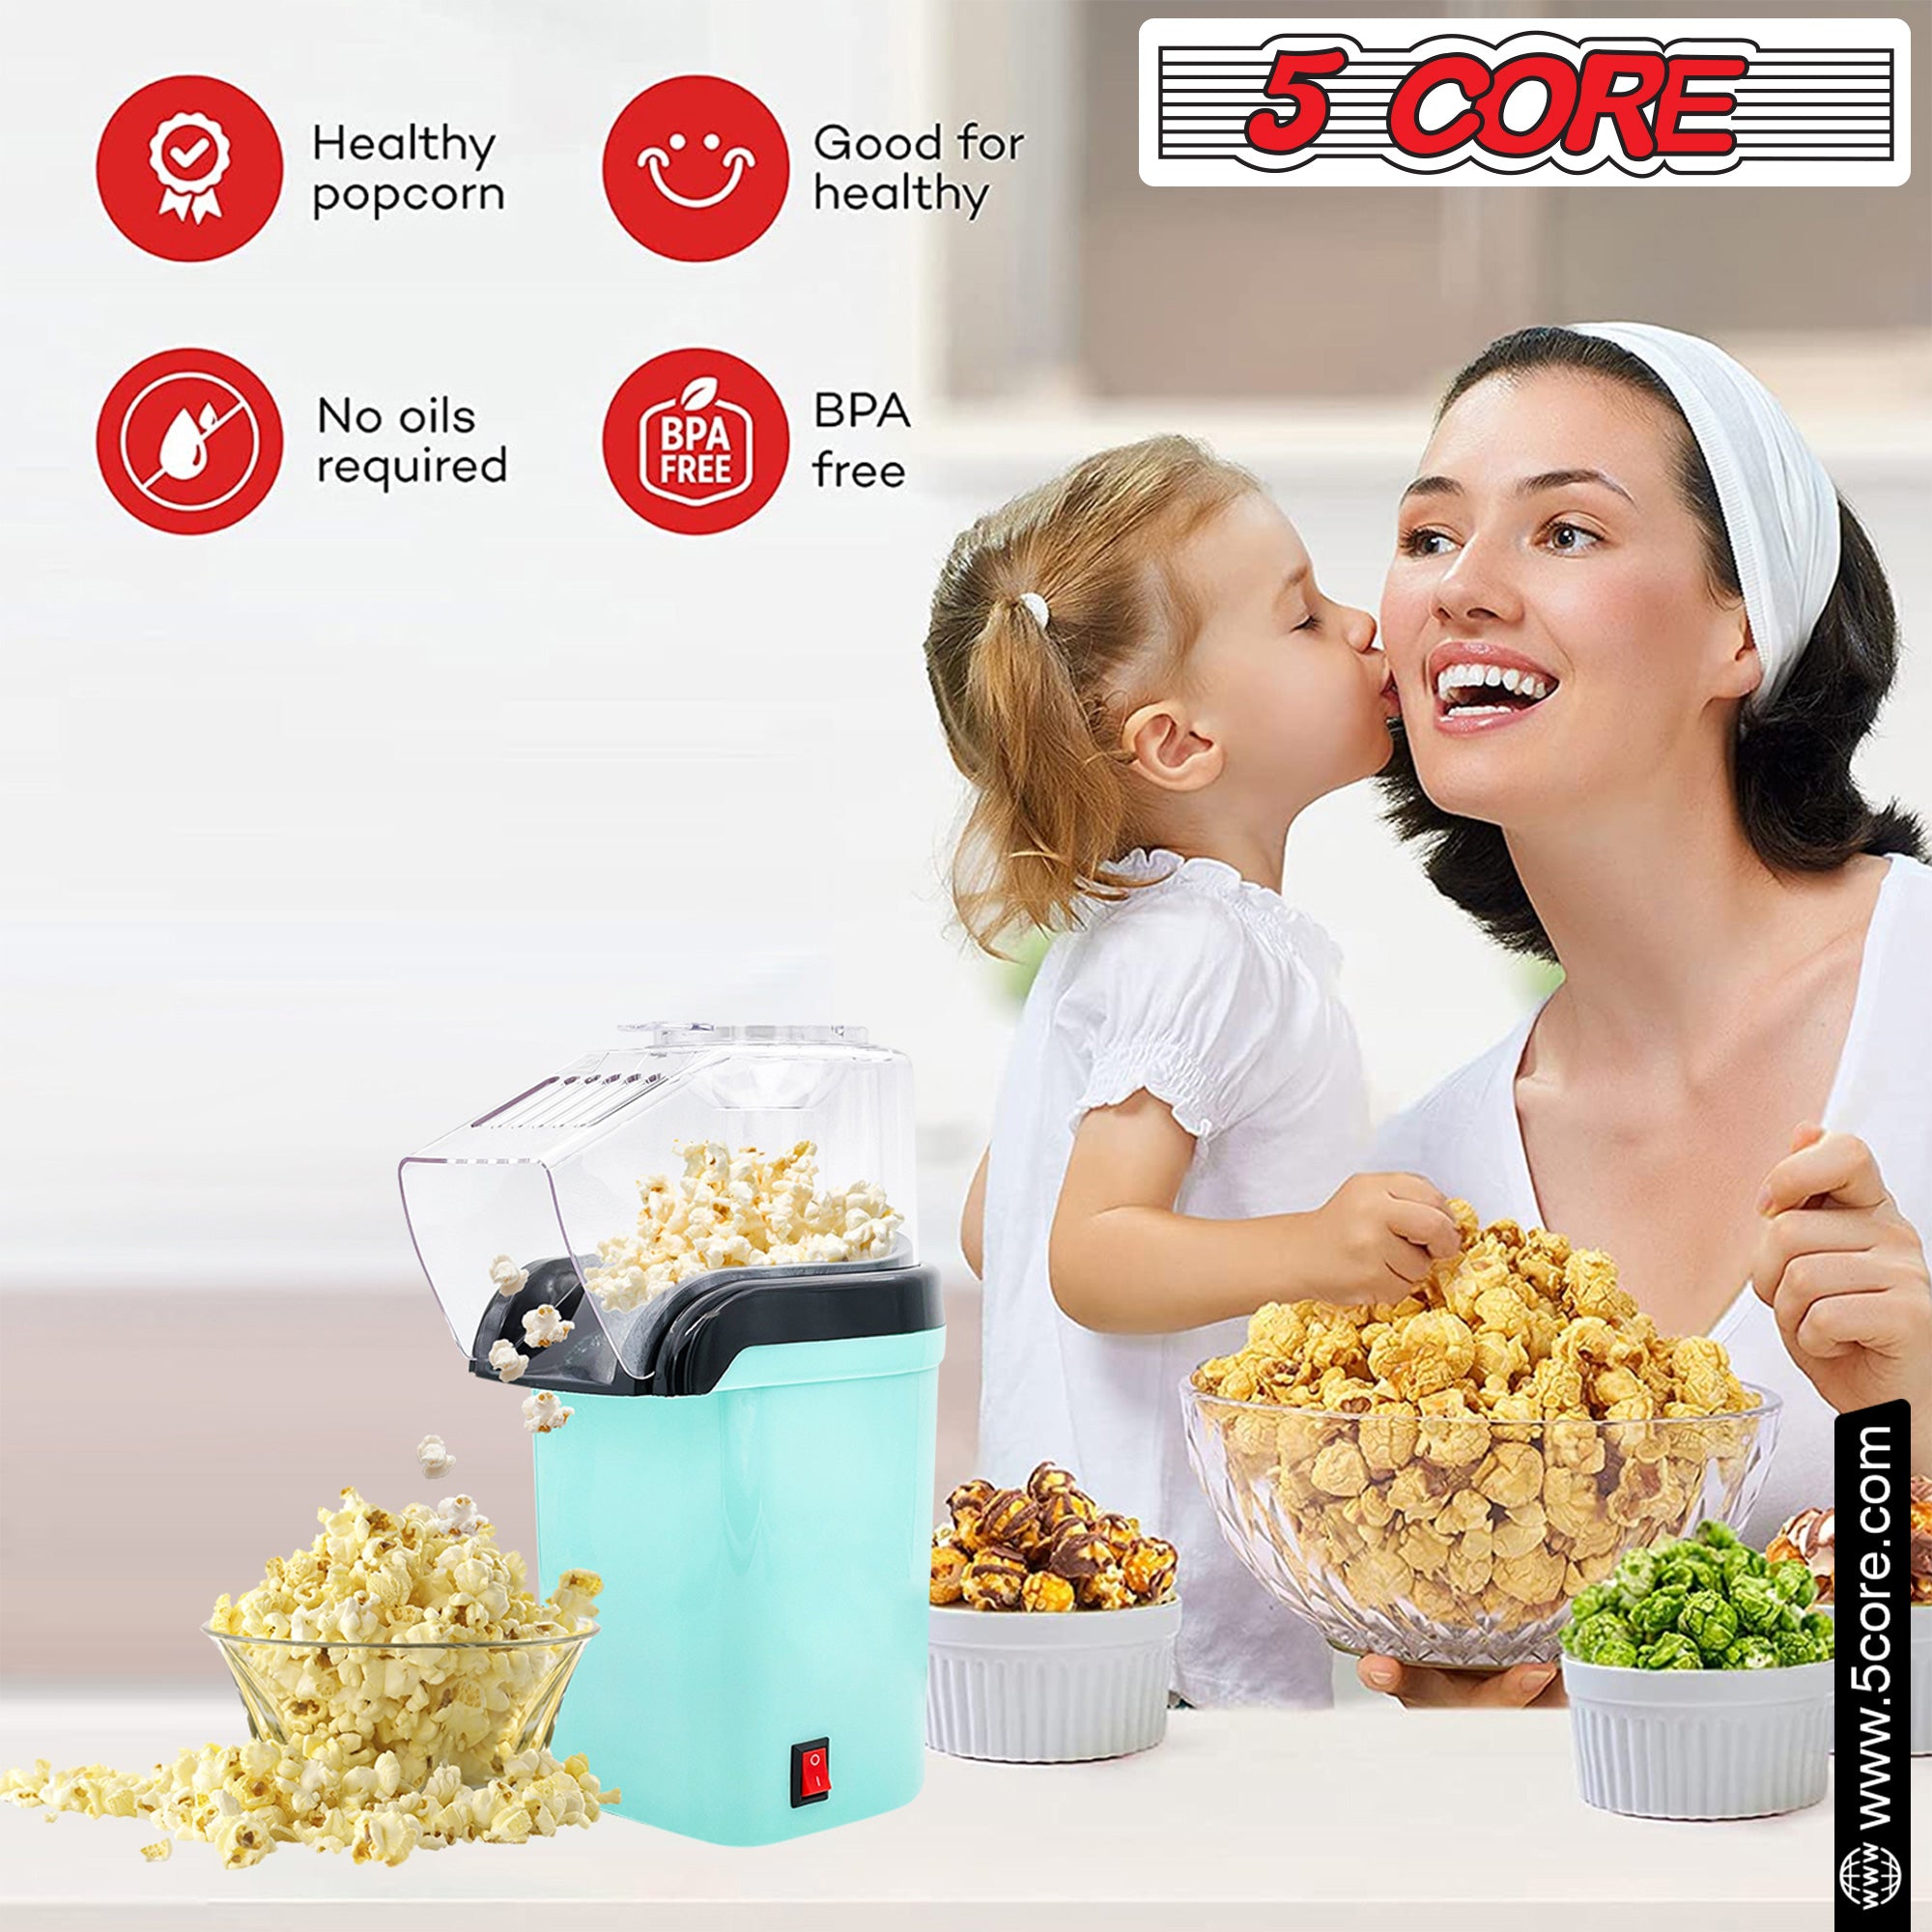 5 core hot popcorn machine gives healthy popcorn